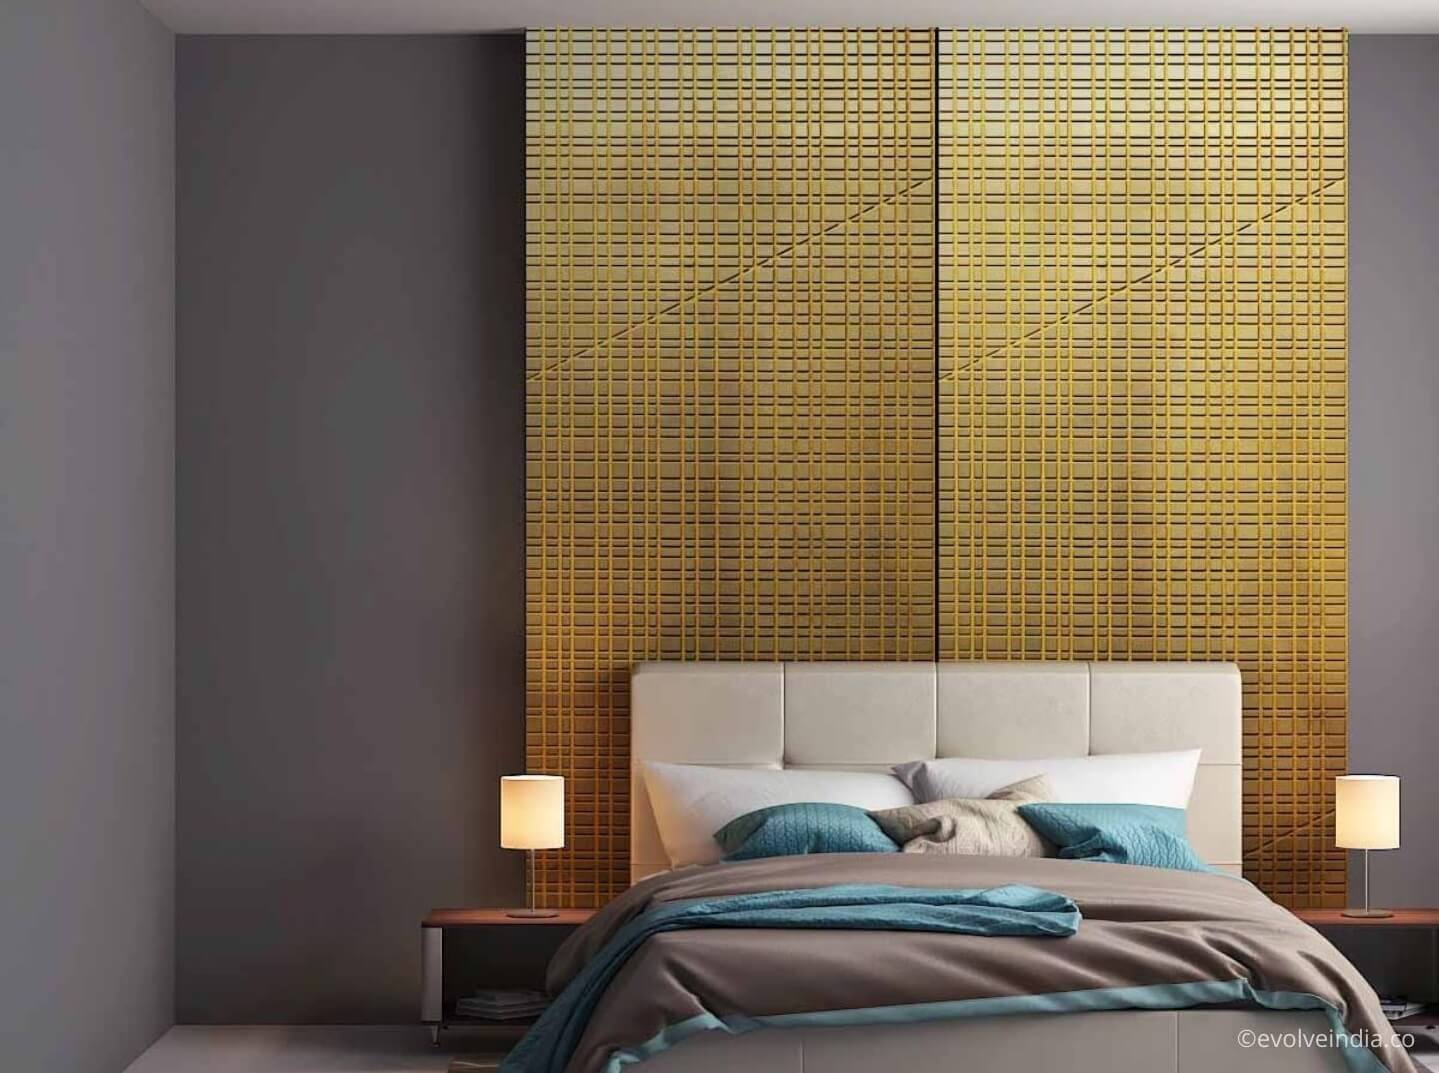 19 Best Bedroom Wall Decor Ideas in 2022 - Bedroom Wall Decor Inspiration